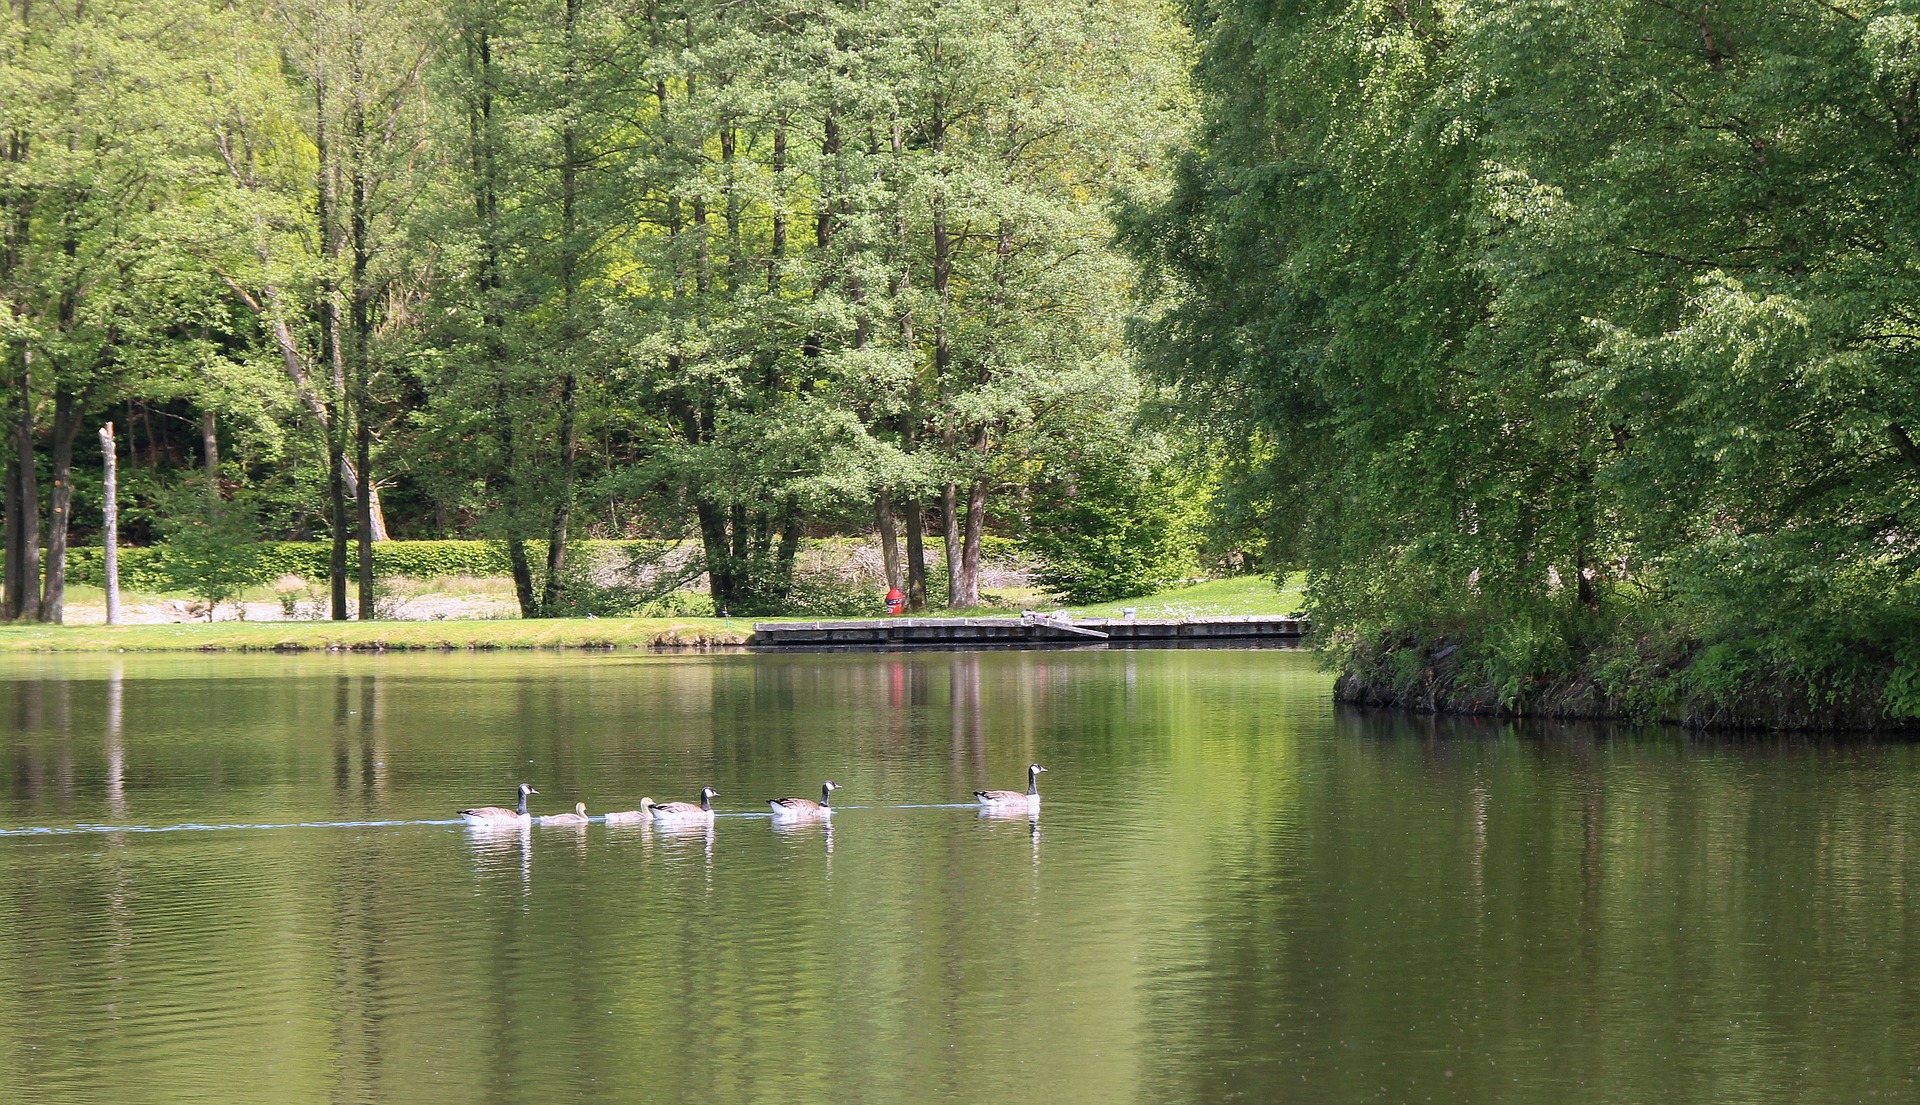 Ducks in the lake photo